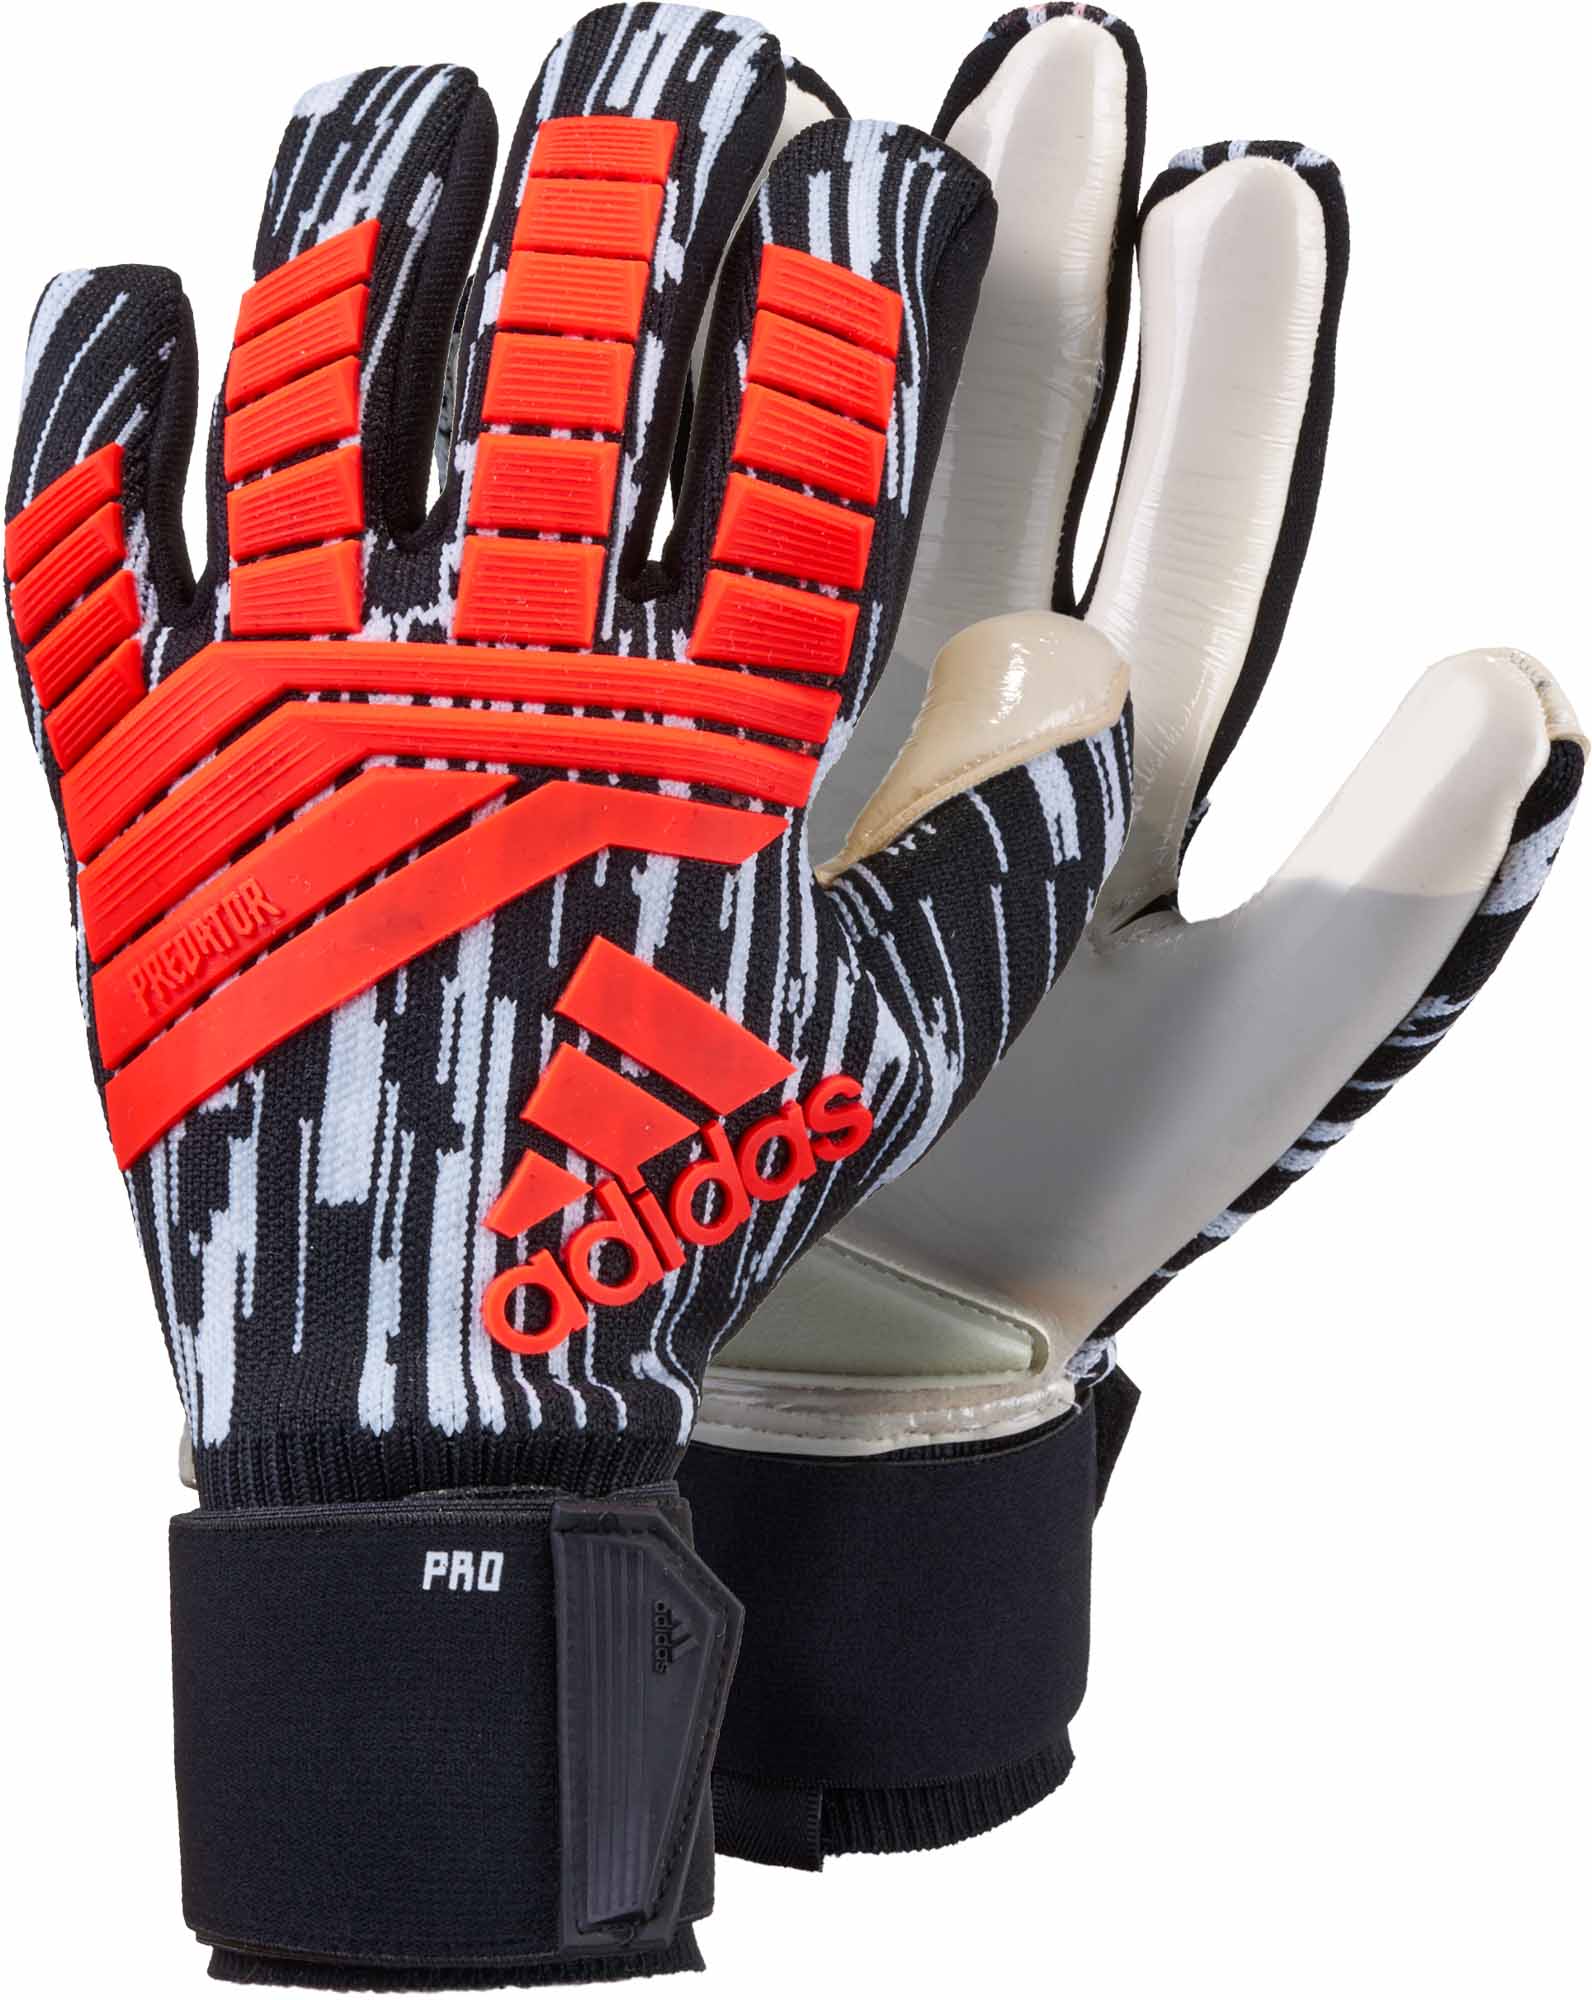 adidas Predator Pro Goalkeeper Gloves - Manuel Neuer - Solar Red/Black